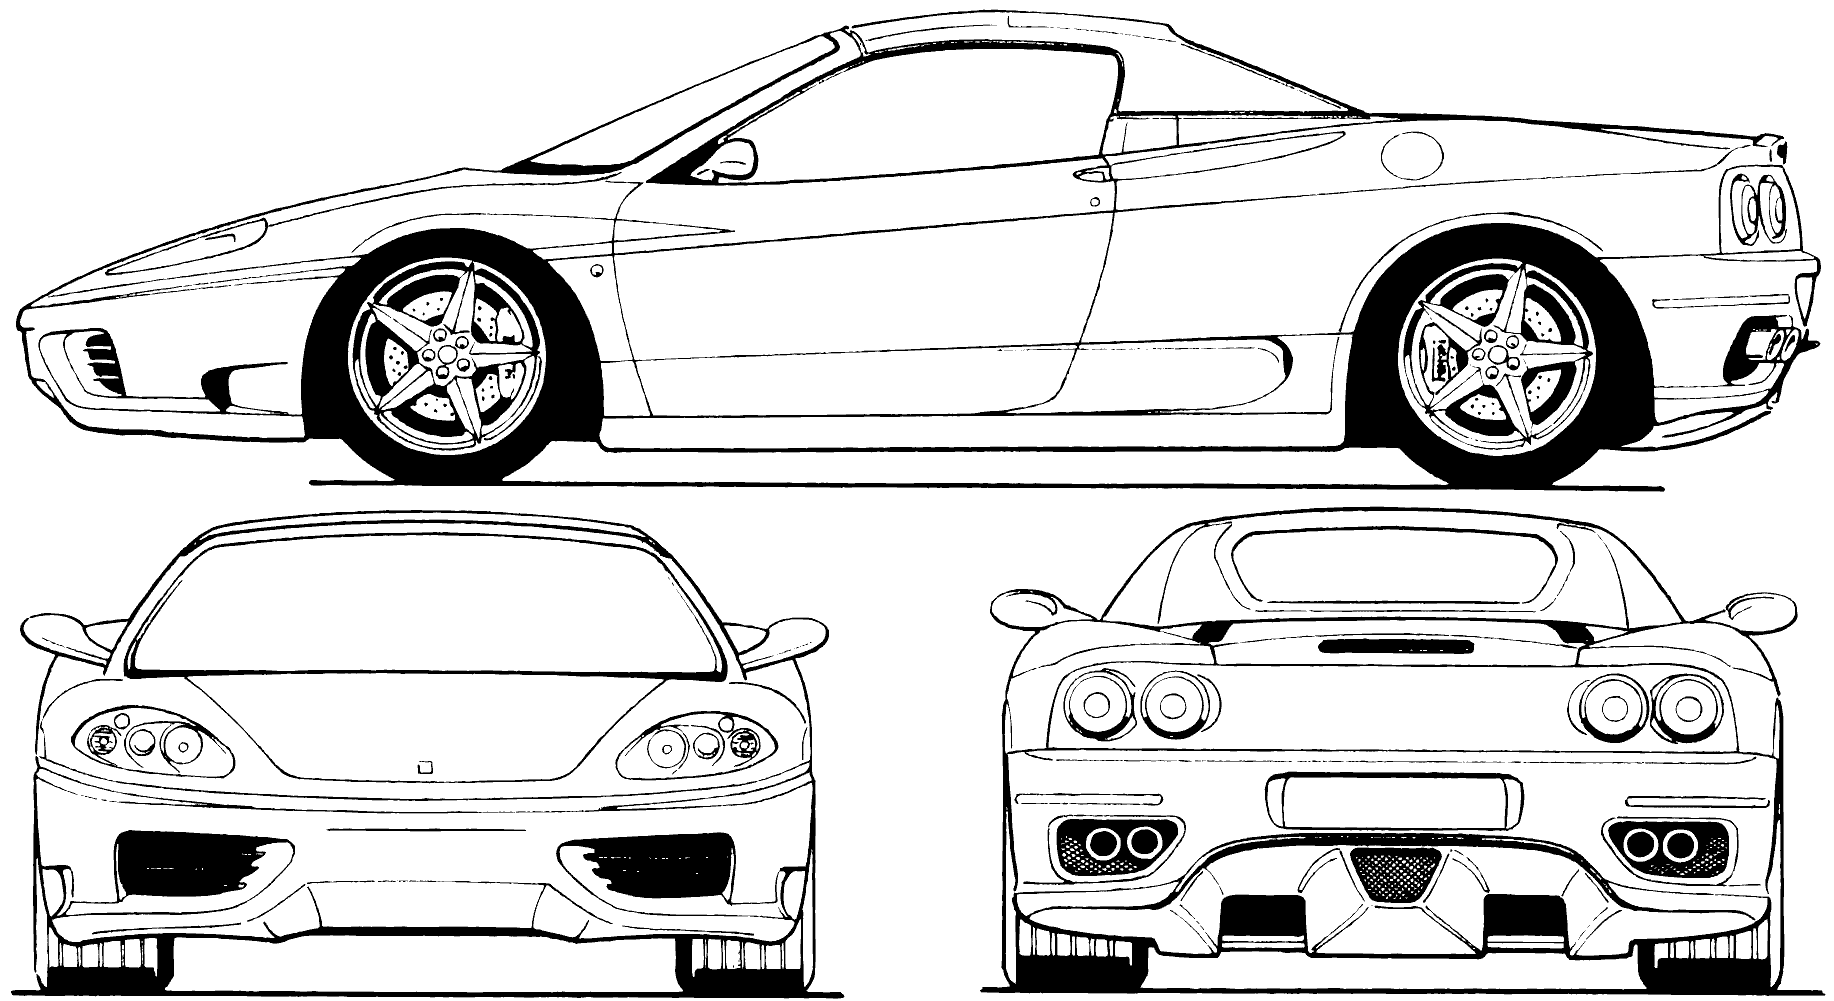 Ferrari 360 spider blueprint